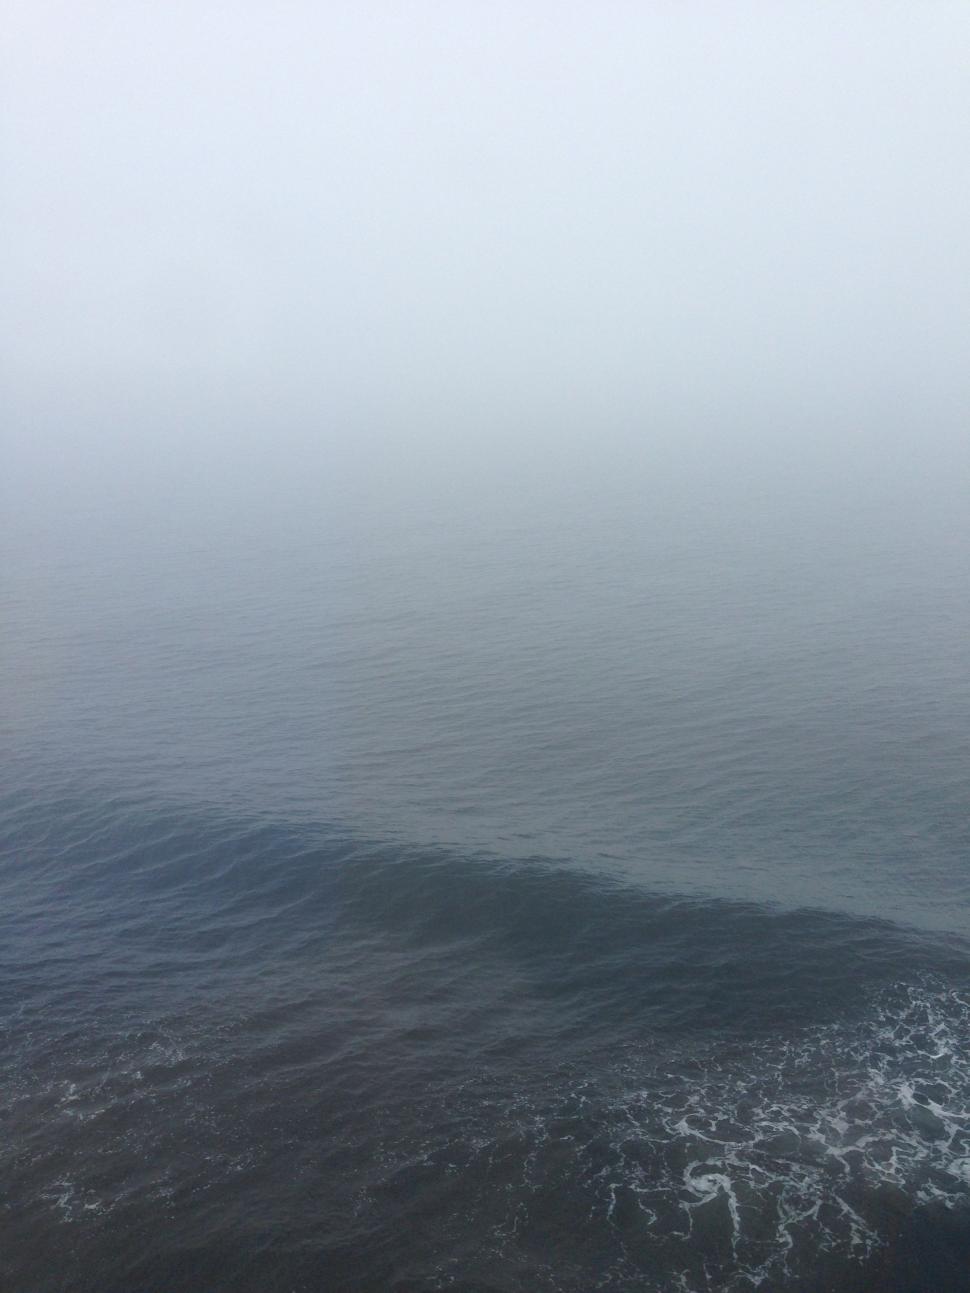 Free Image of Misty Lake Surrounded by Fog 